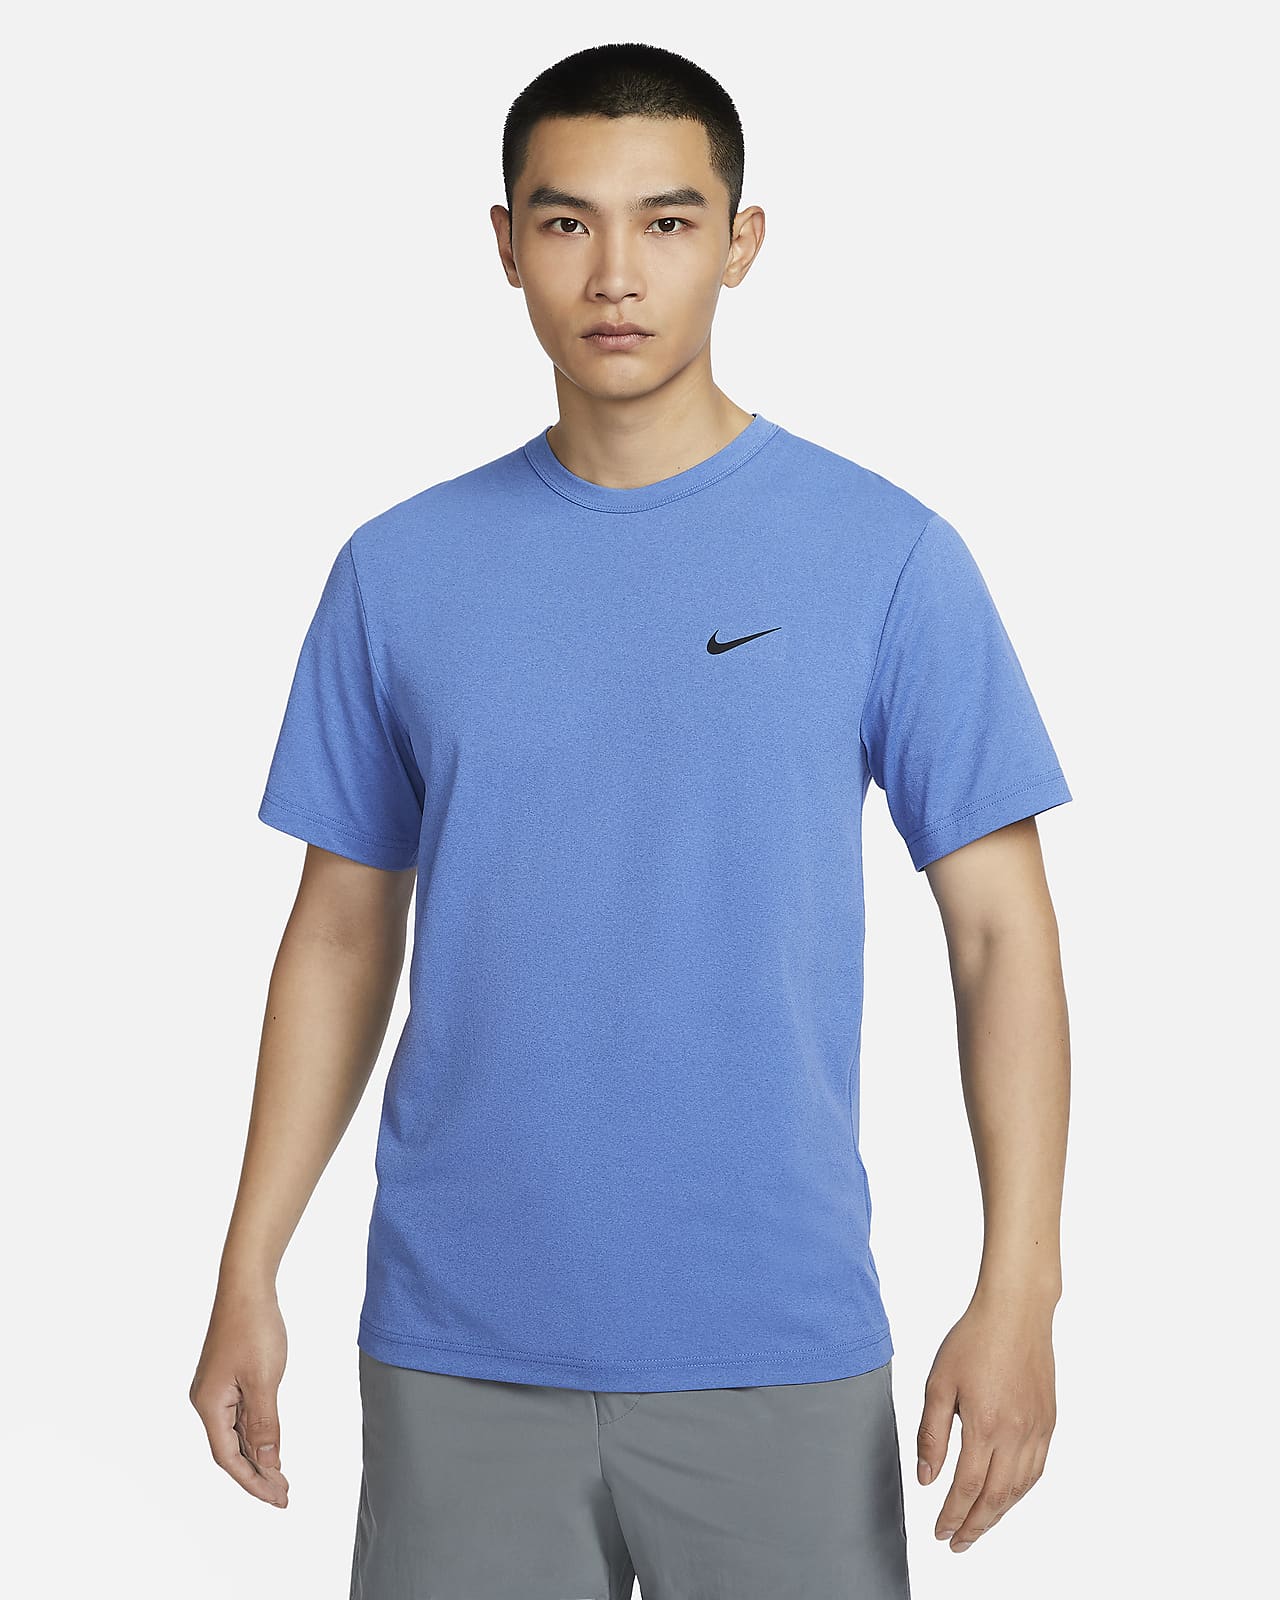 Nike Dri-FIT UV Hyverse 男款短袖健身上衣